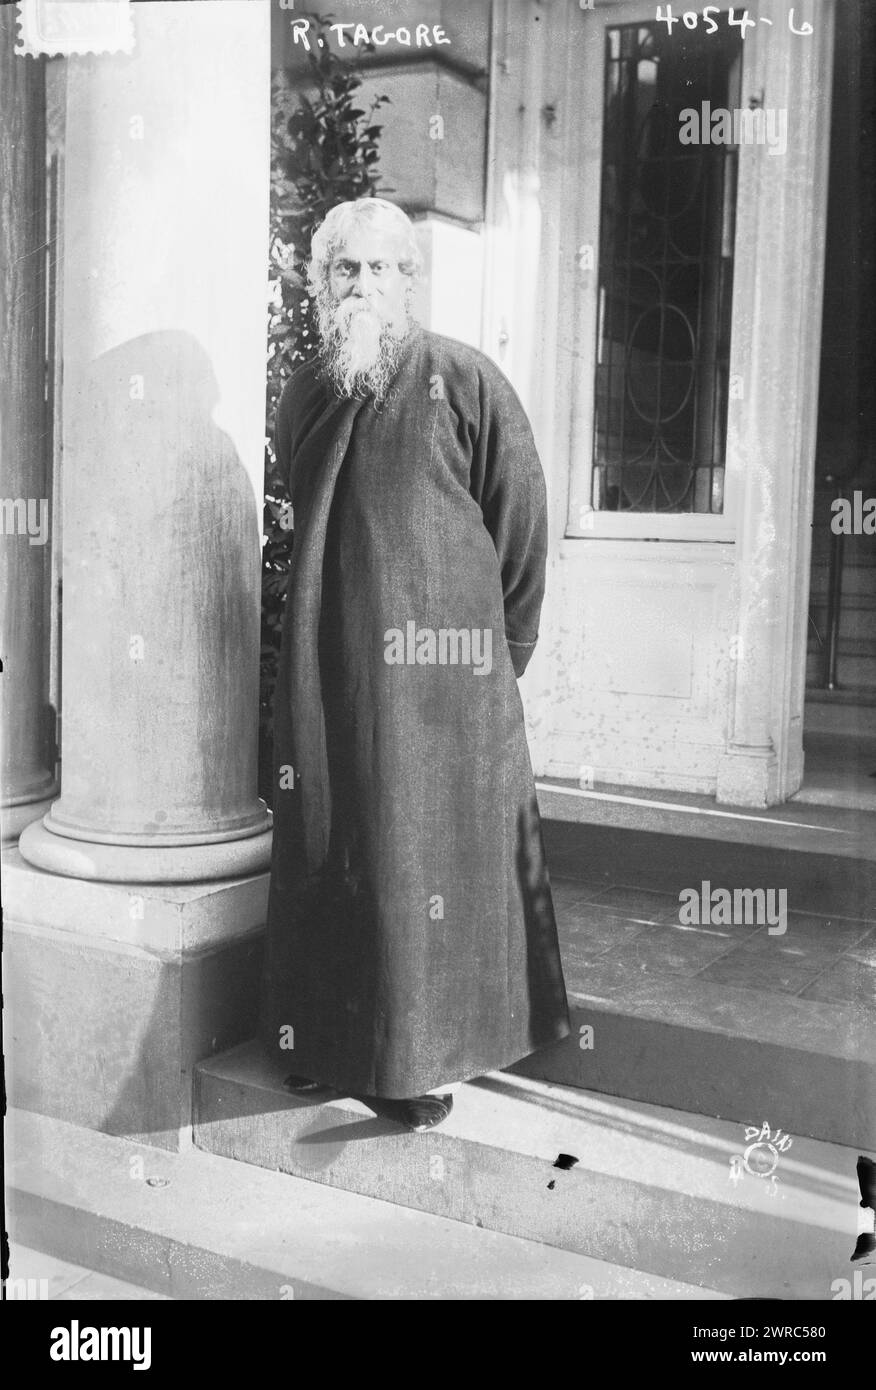 R. Tagore, Photo shows Rabindranath Tagore (1861-1941)., 1916 Nov. 21., Glass negatives, 1 negative: glass Stock Photo